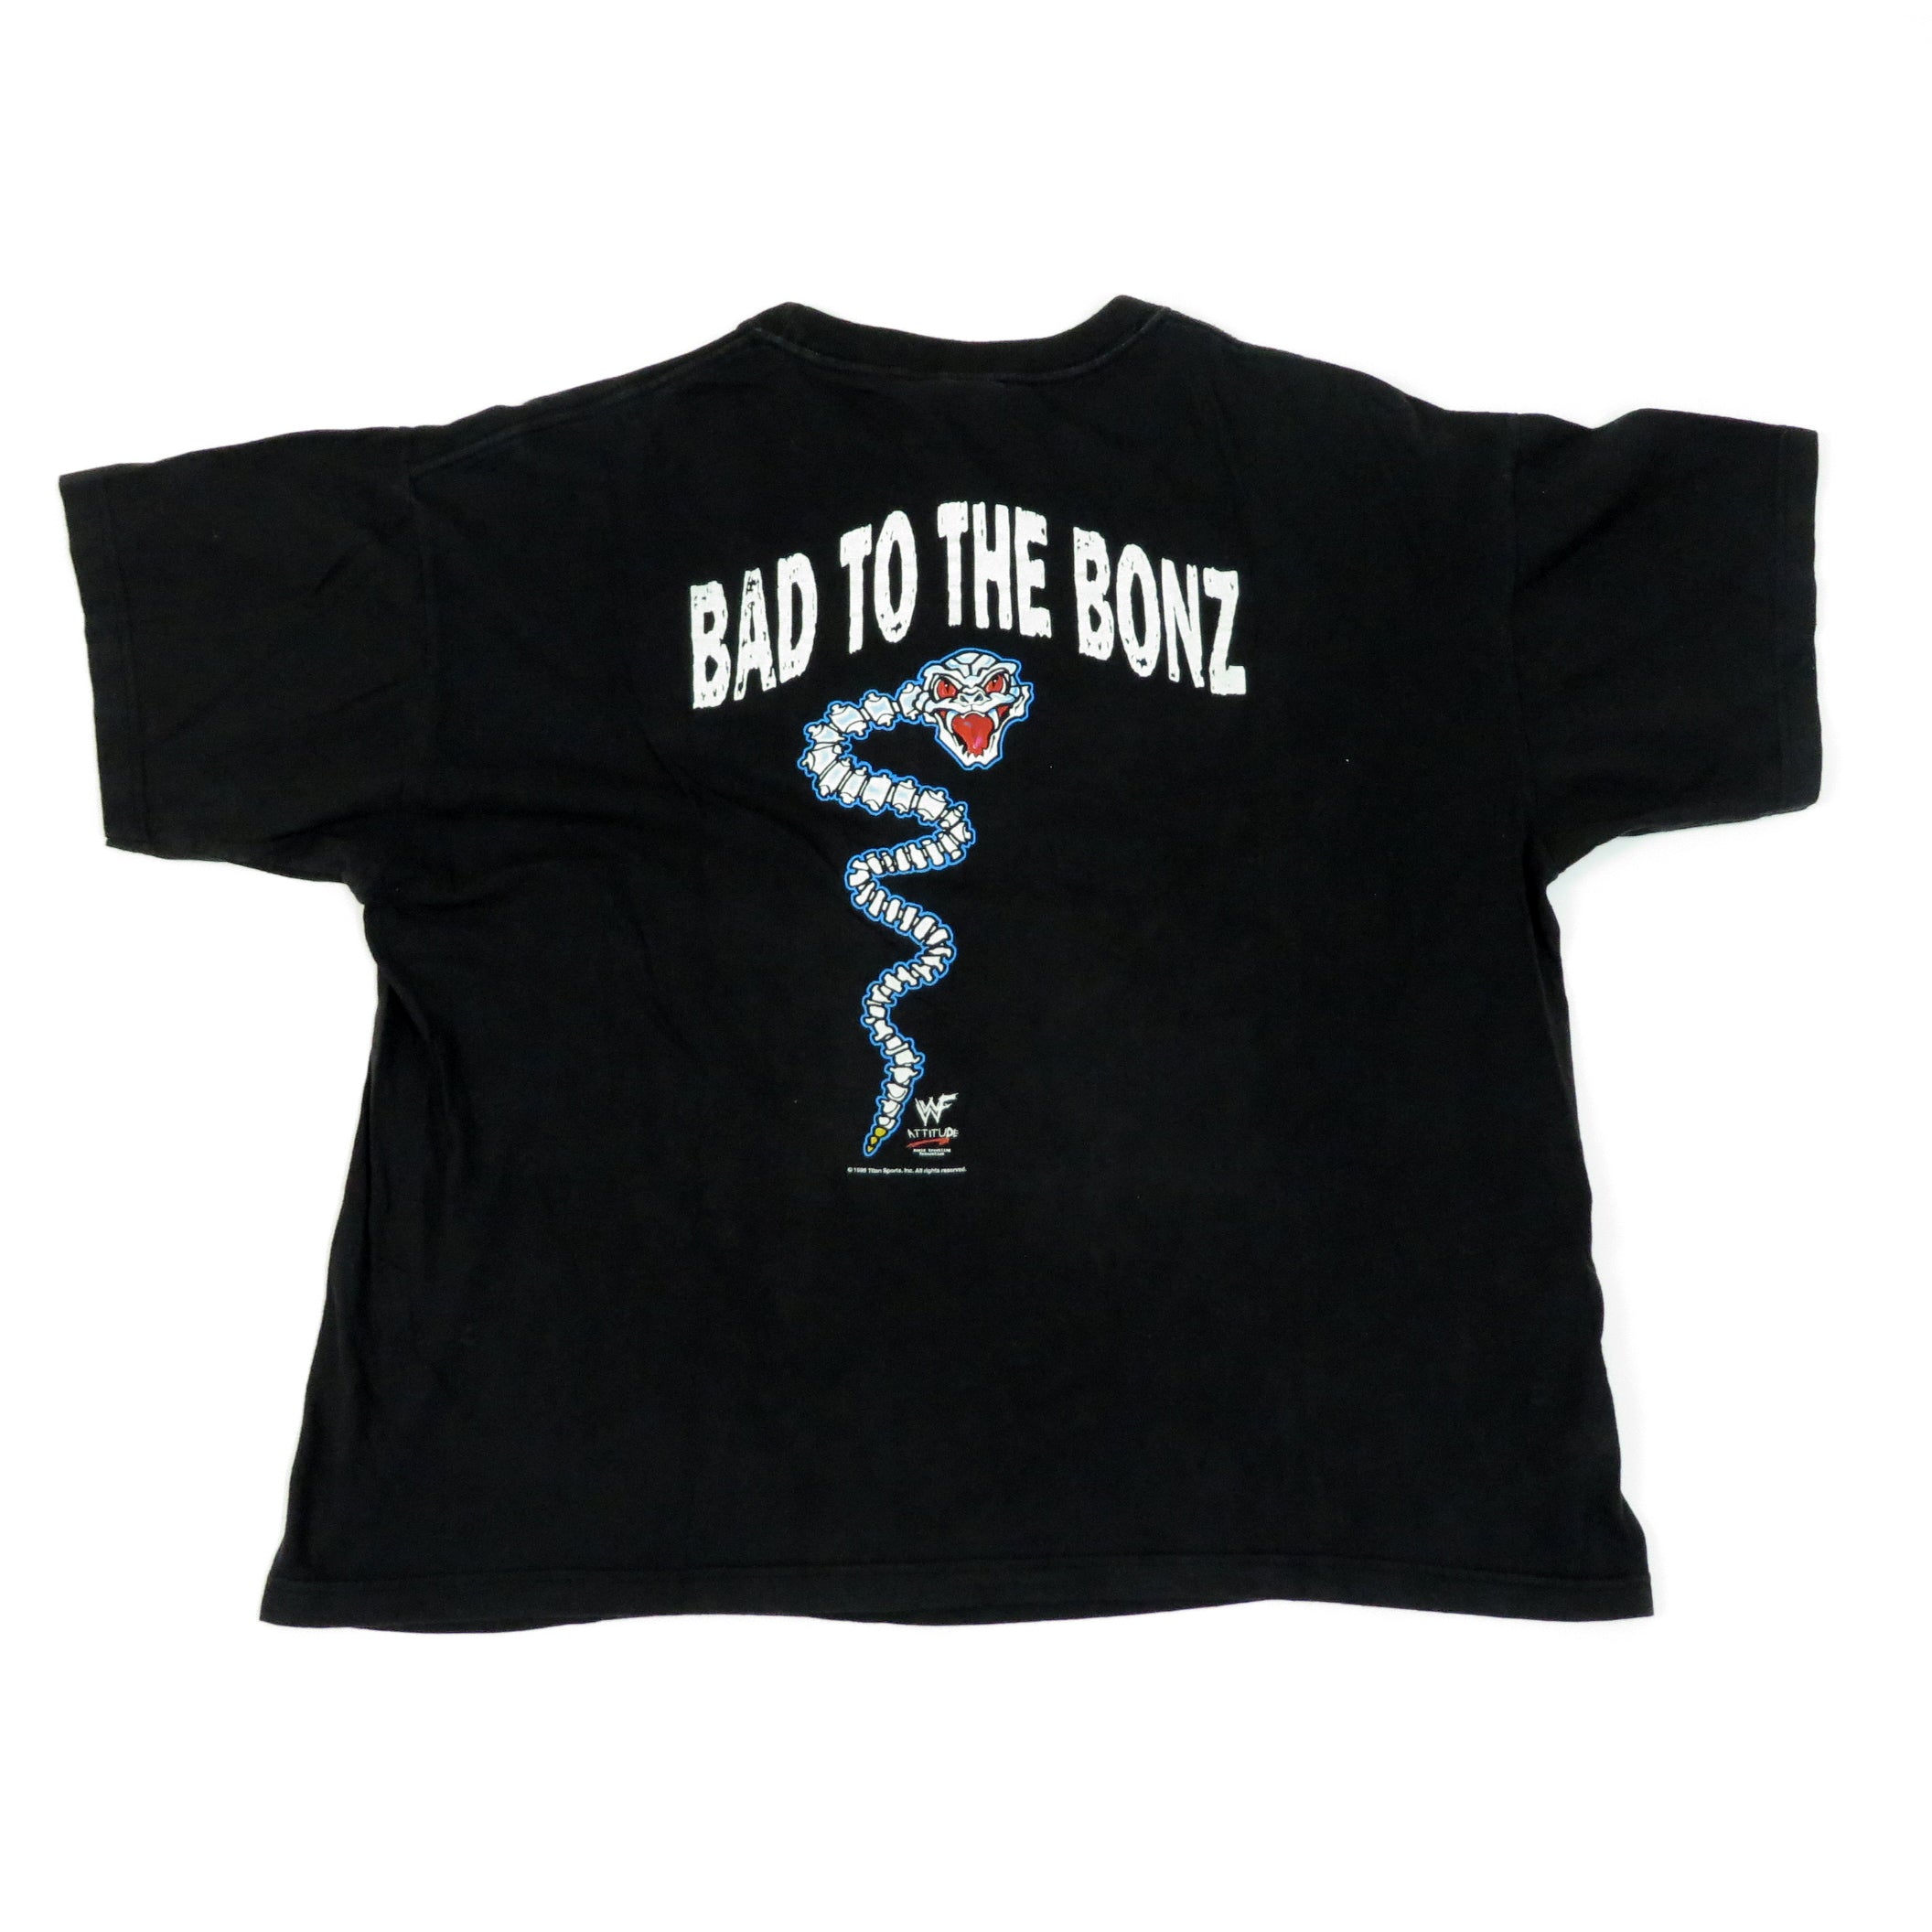 Vintage Stone Cold Austin 3:16 Bad To The Bonz T-Shirt Sz XL